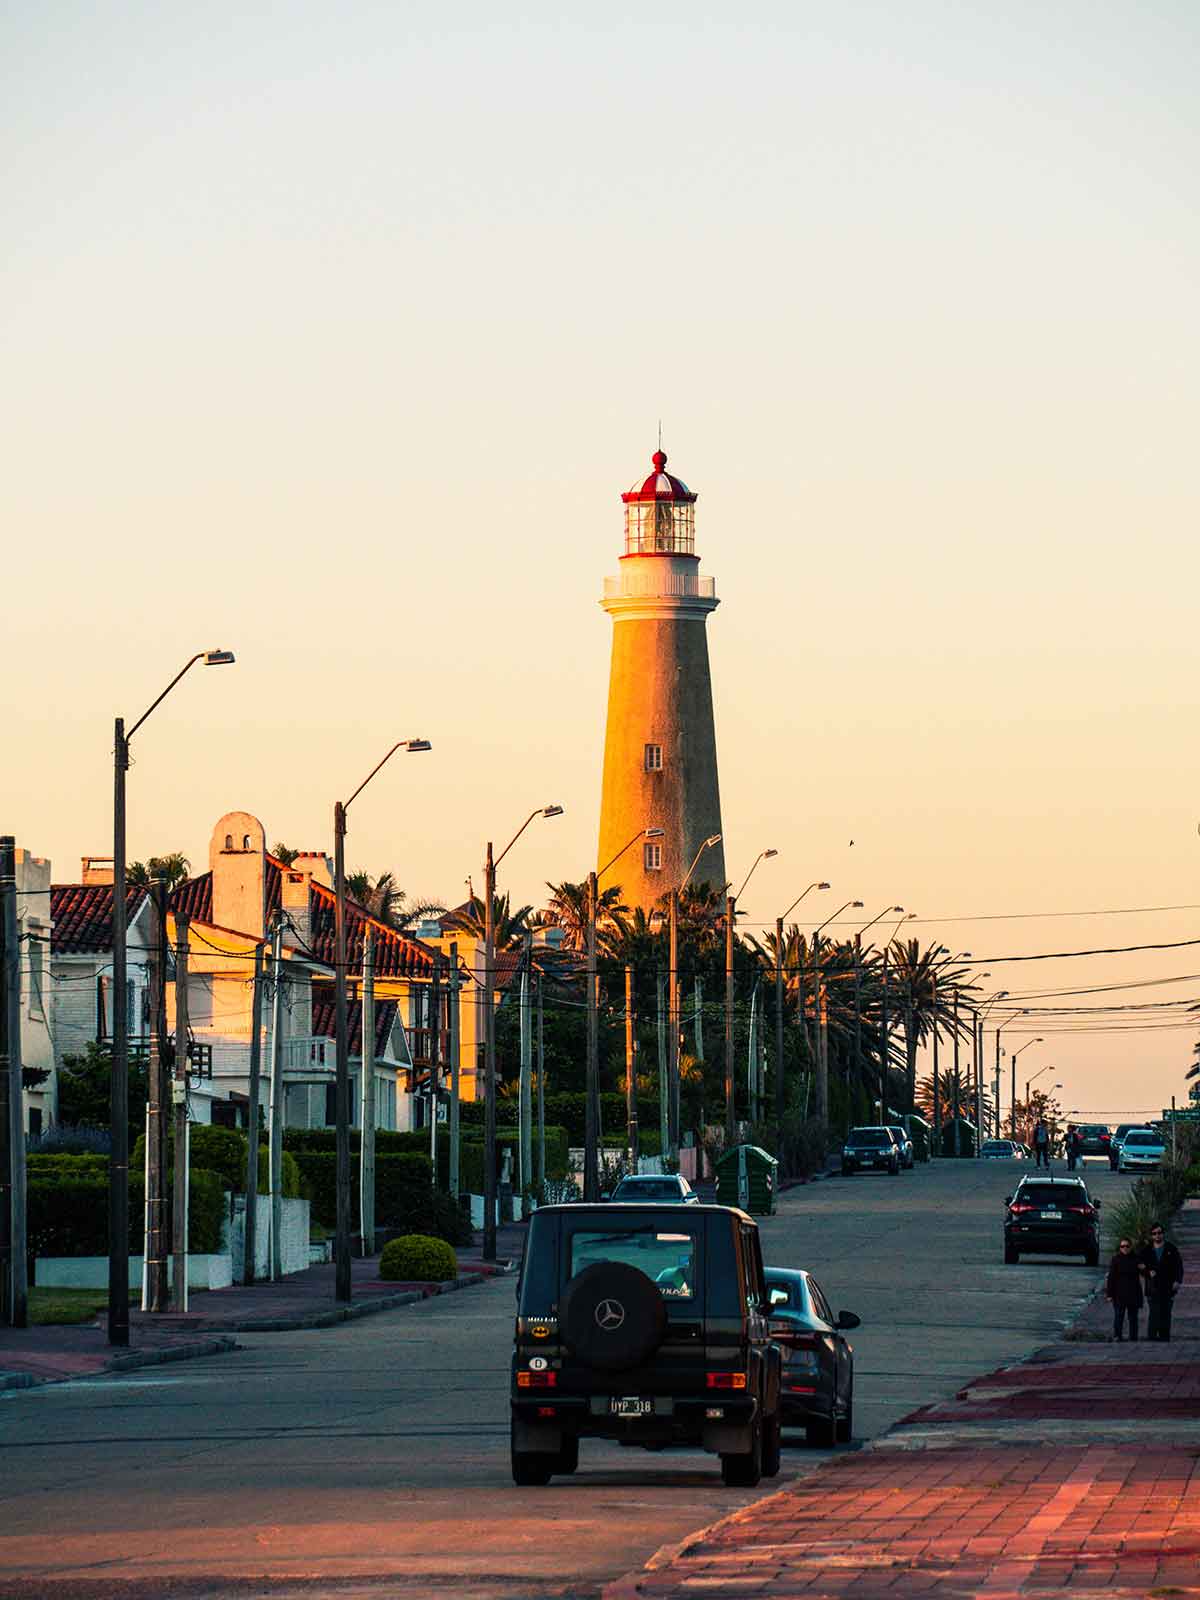 The lighthouse in Punta del Este